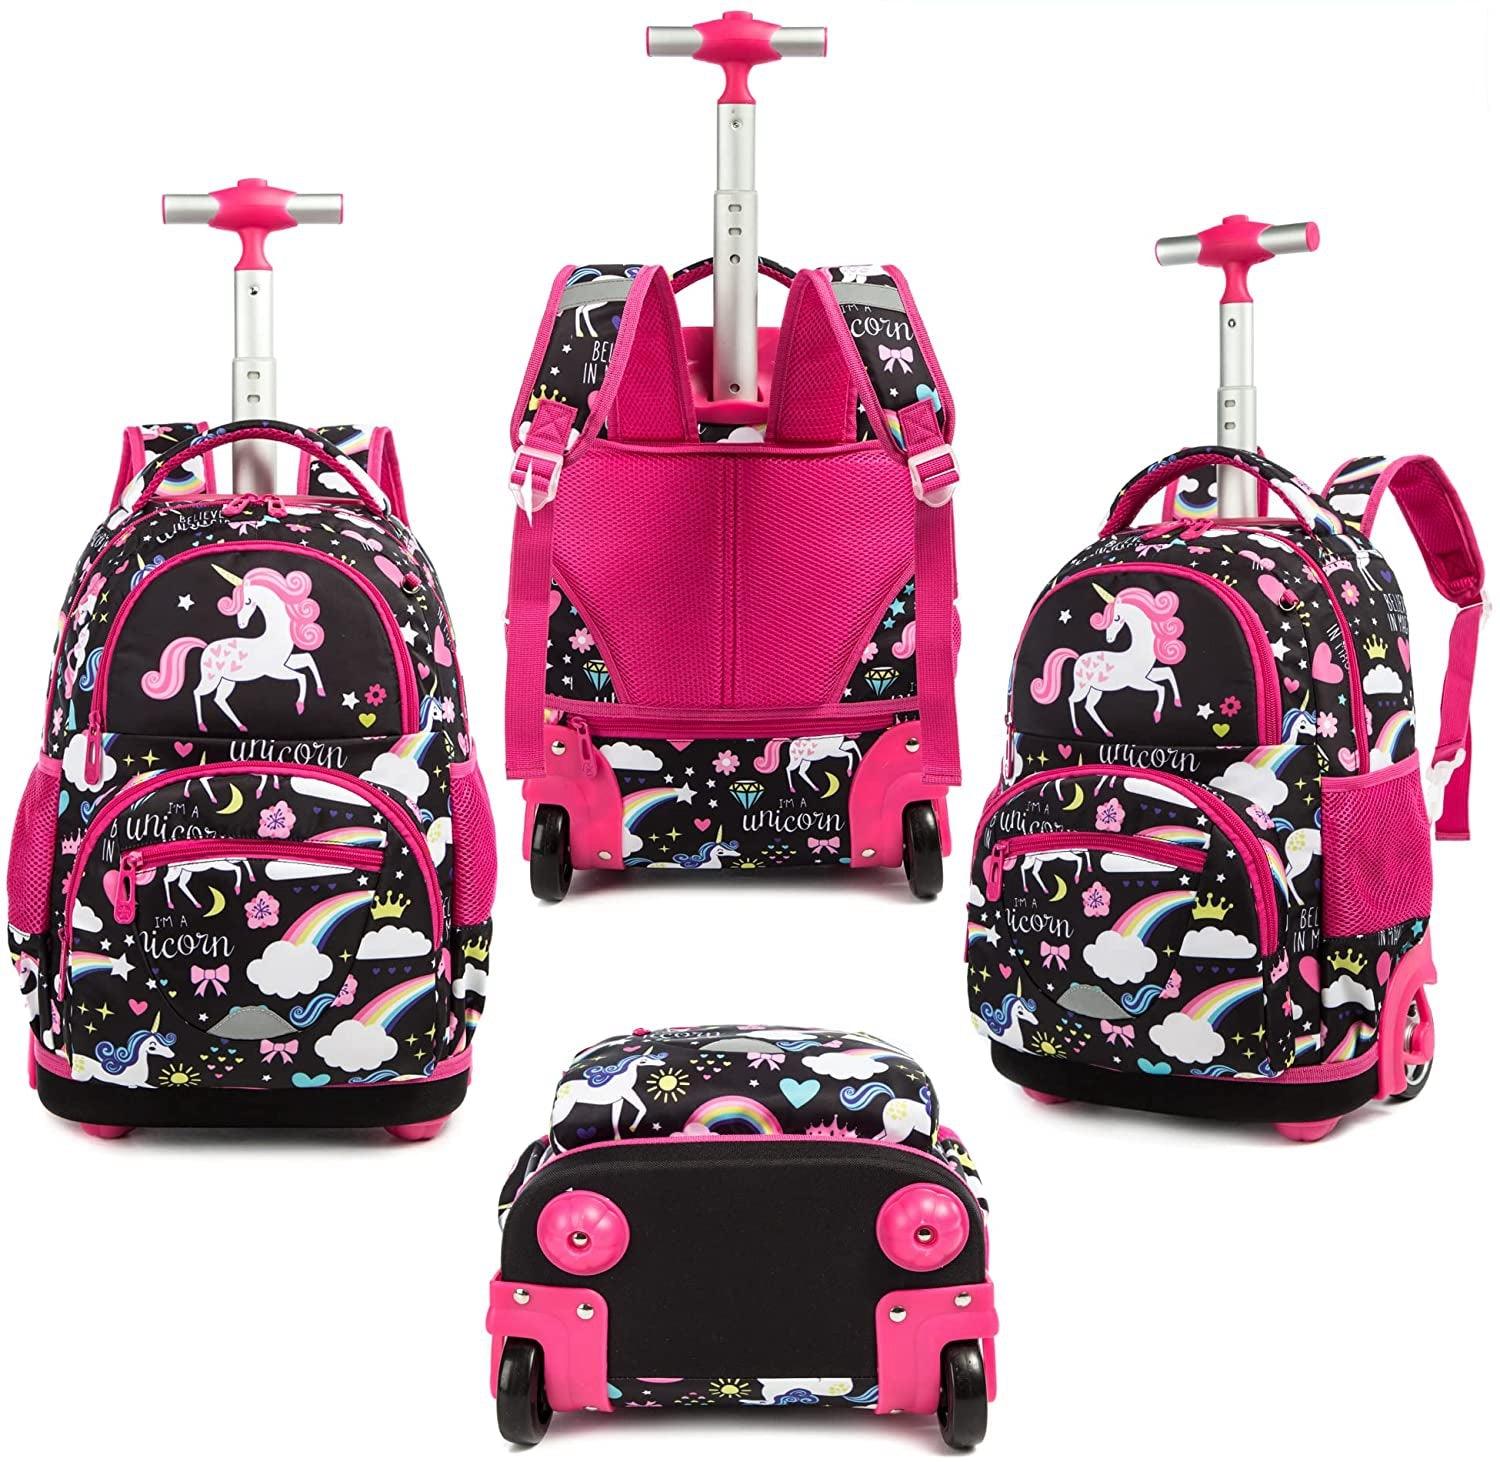 3-piece unicorn school bag with zipper and wheels - Unicorn